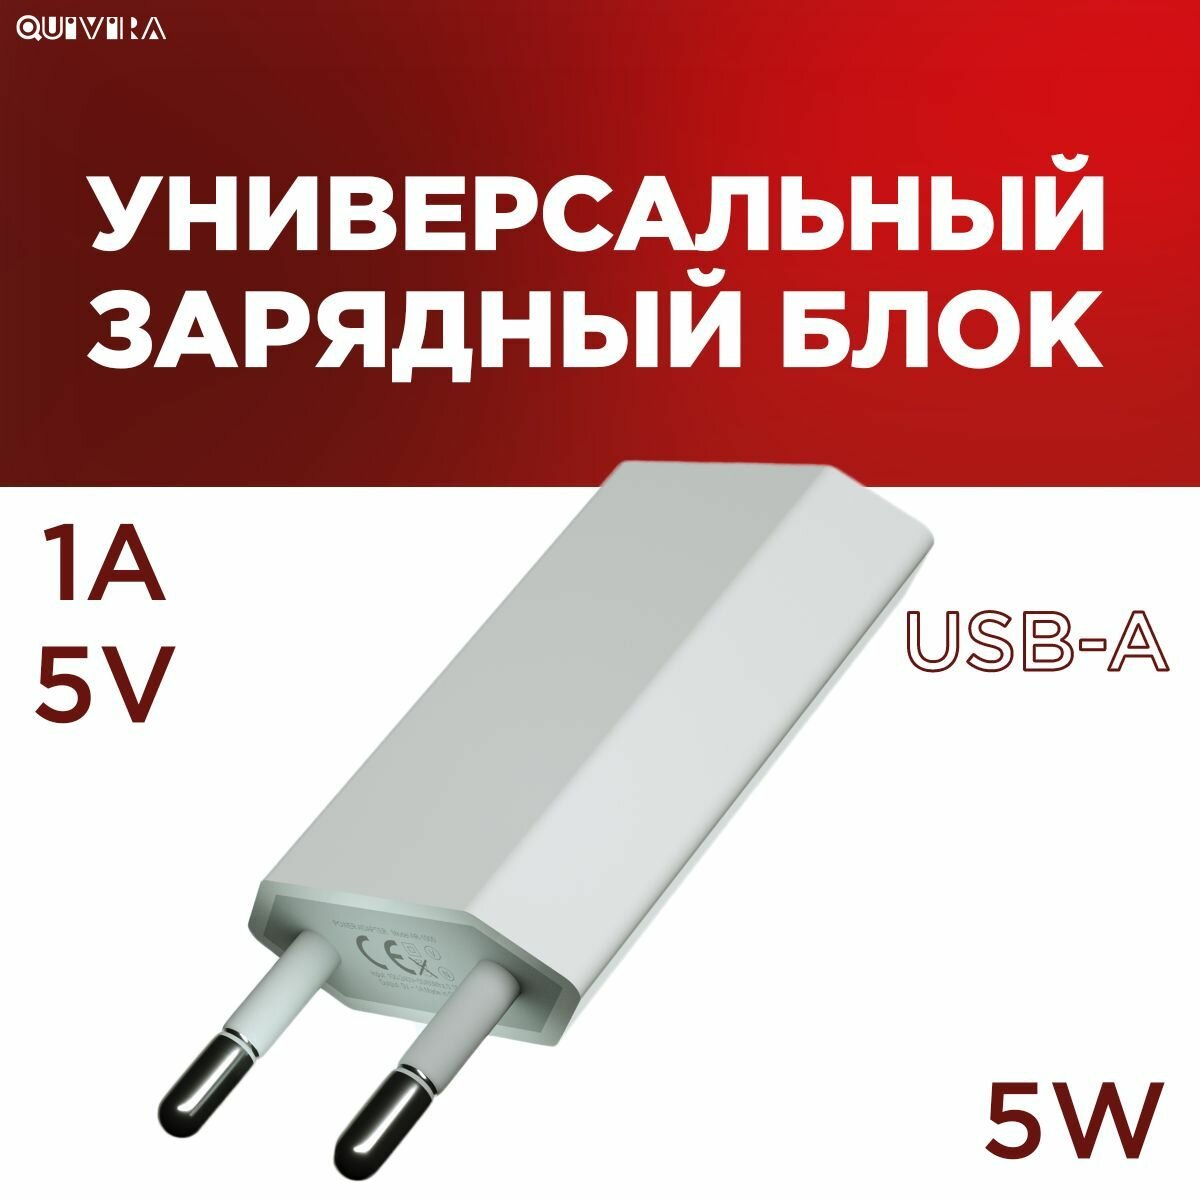 Блок для зарядки iphone / Зарядка для iphone / Адаптер USB 5 Вт